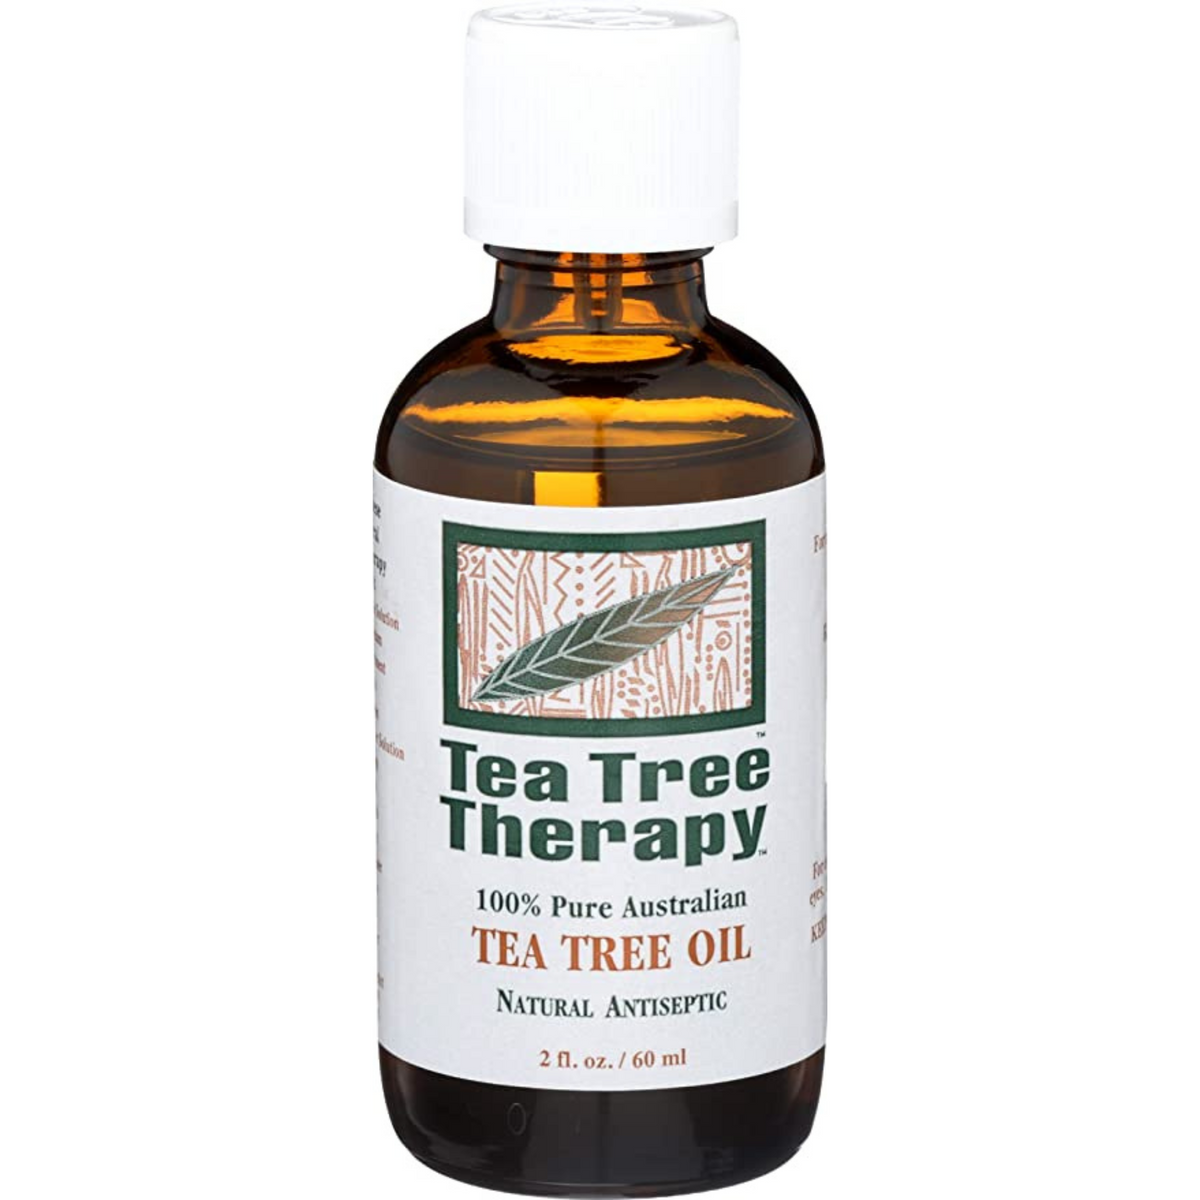 Primary Image of Tea Tree Therapy Tea Tree Oil (2.0 fl oz)